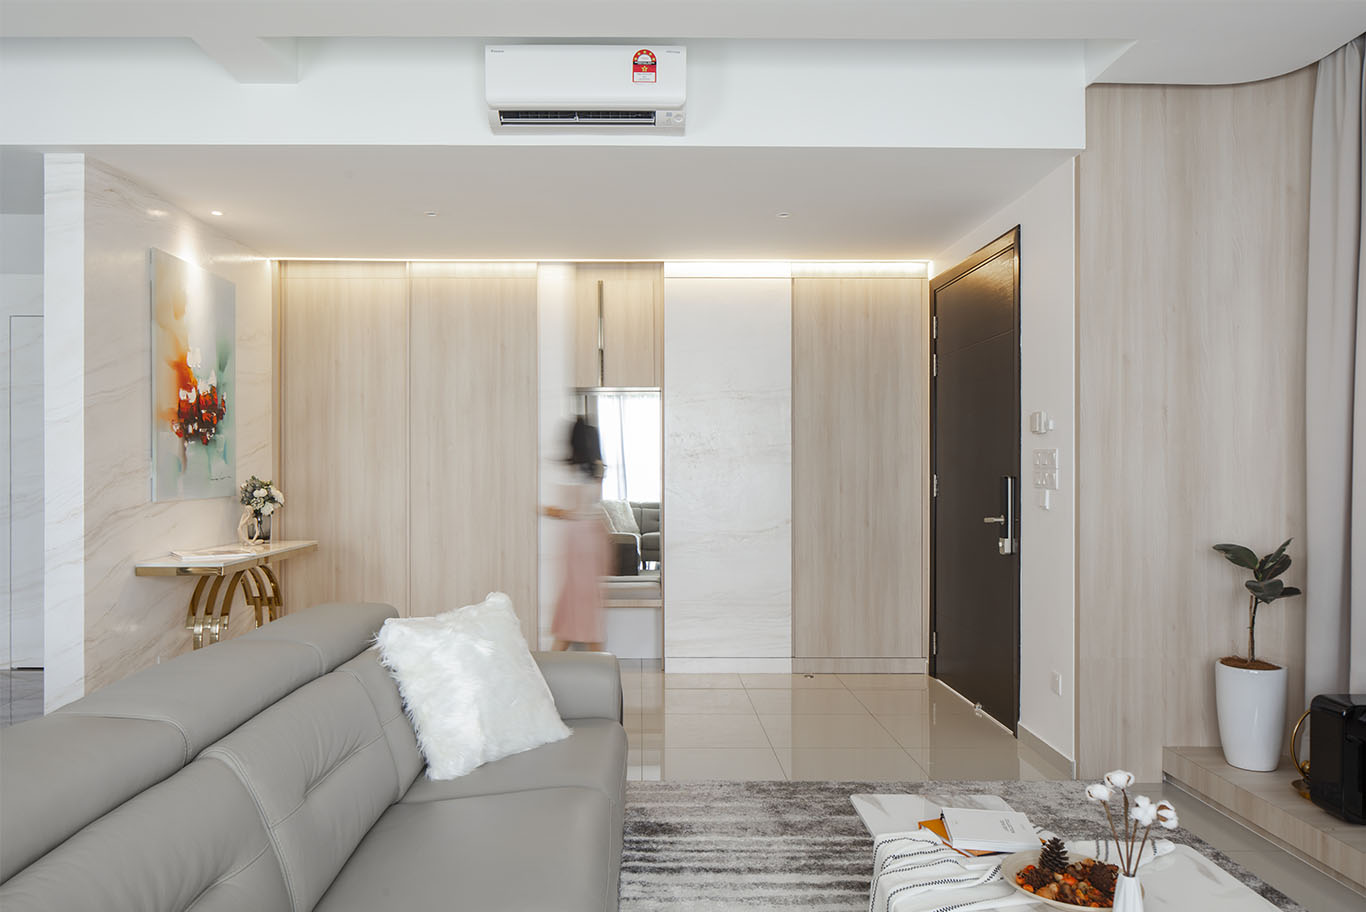 Grande Rhapsody minimalist living room with hidden spot Mieux interior design